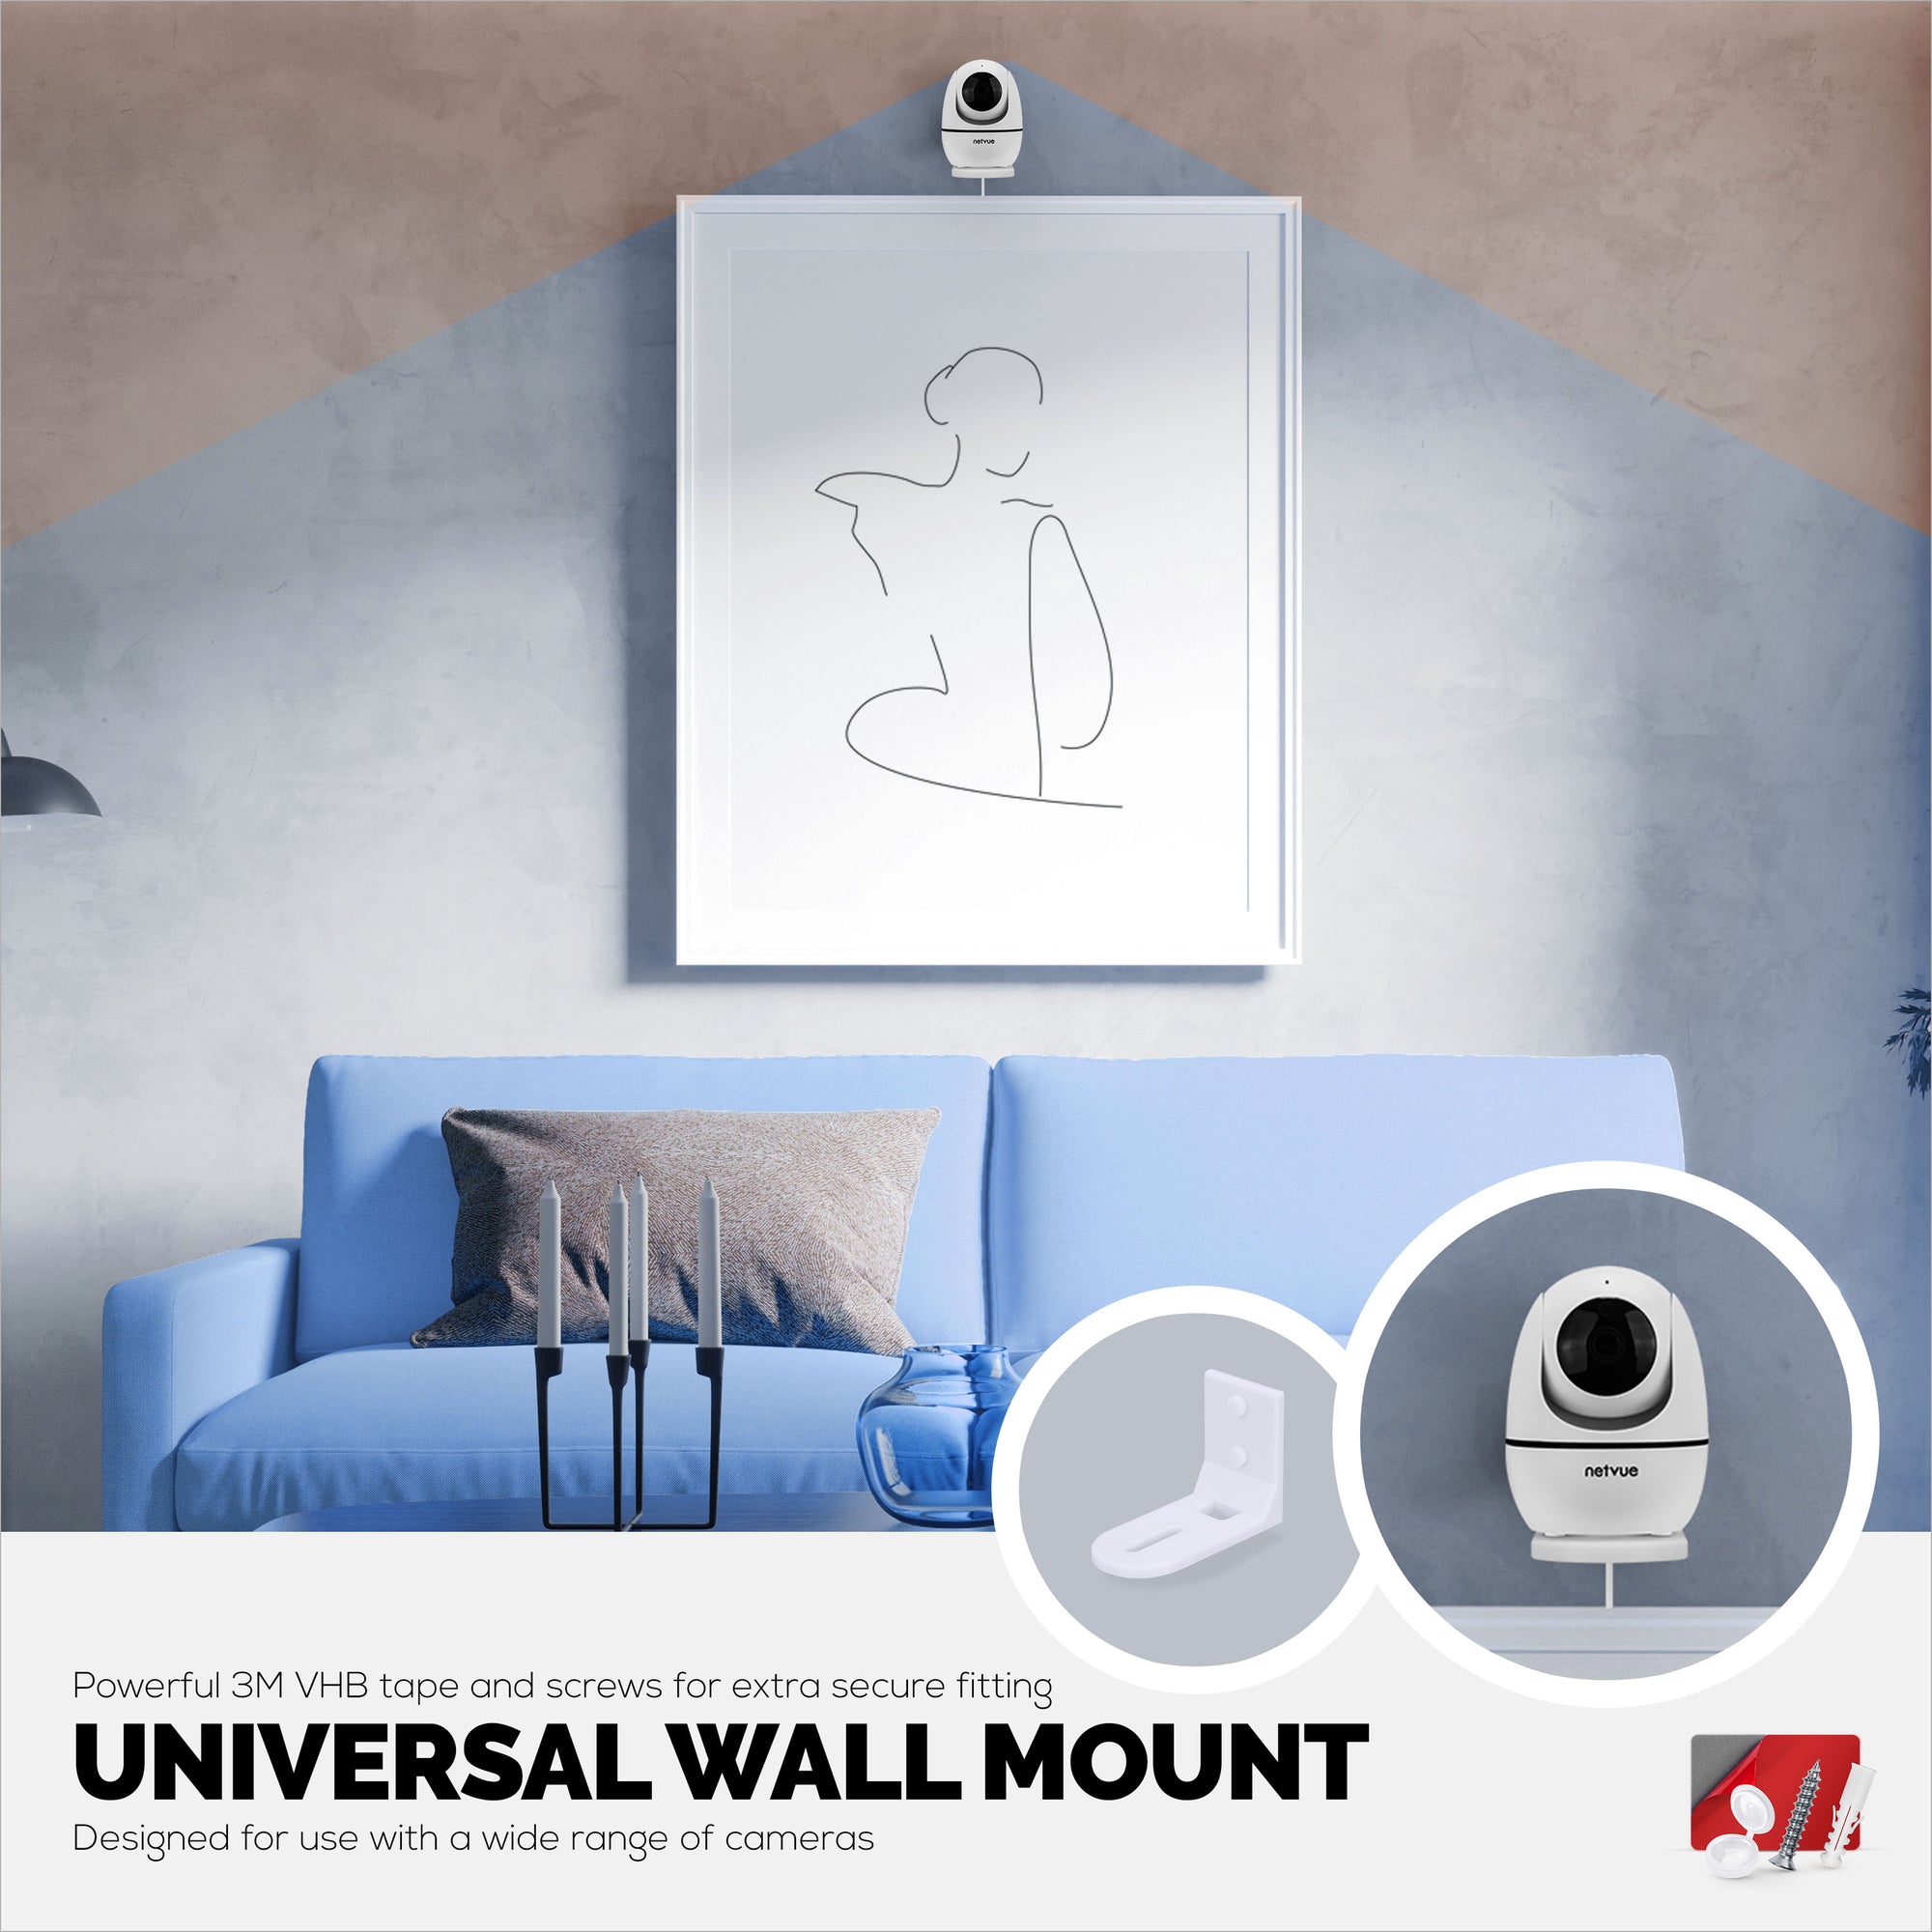 Wall Mount for BabySense V43 Baby Monitor Camera - Adhesive Holder, Ea -  Brainwavz Audio